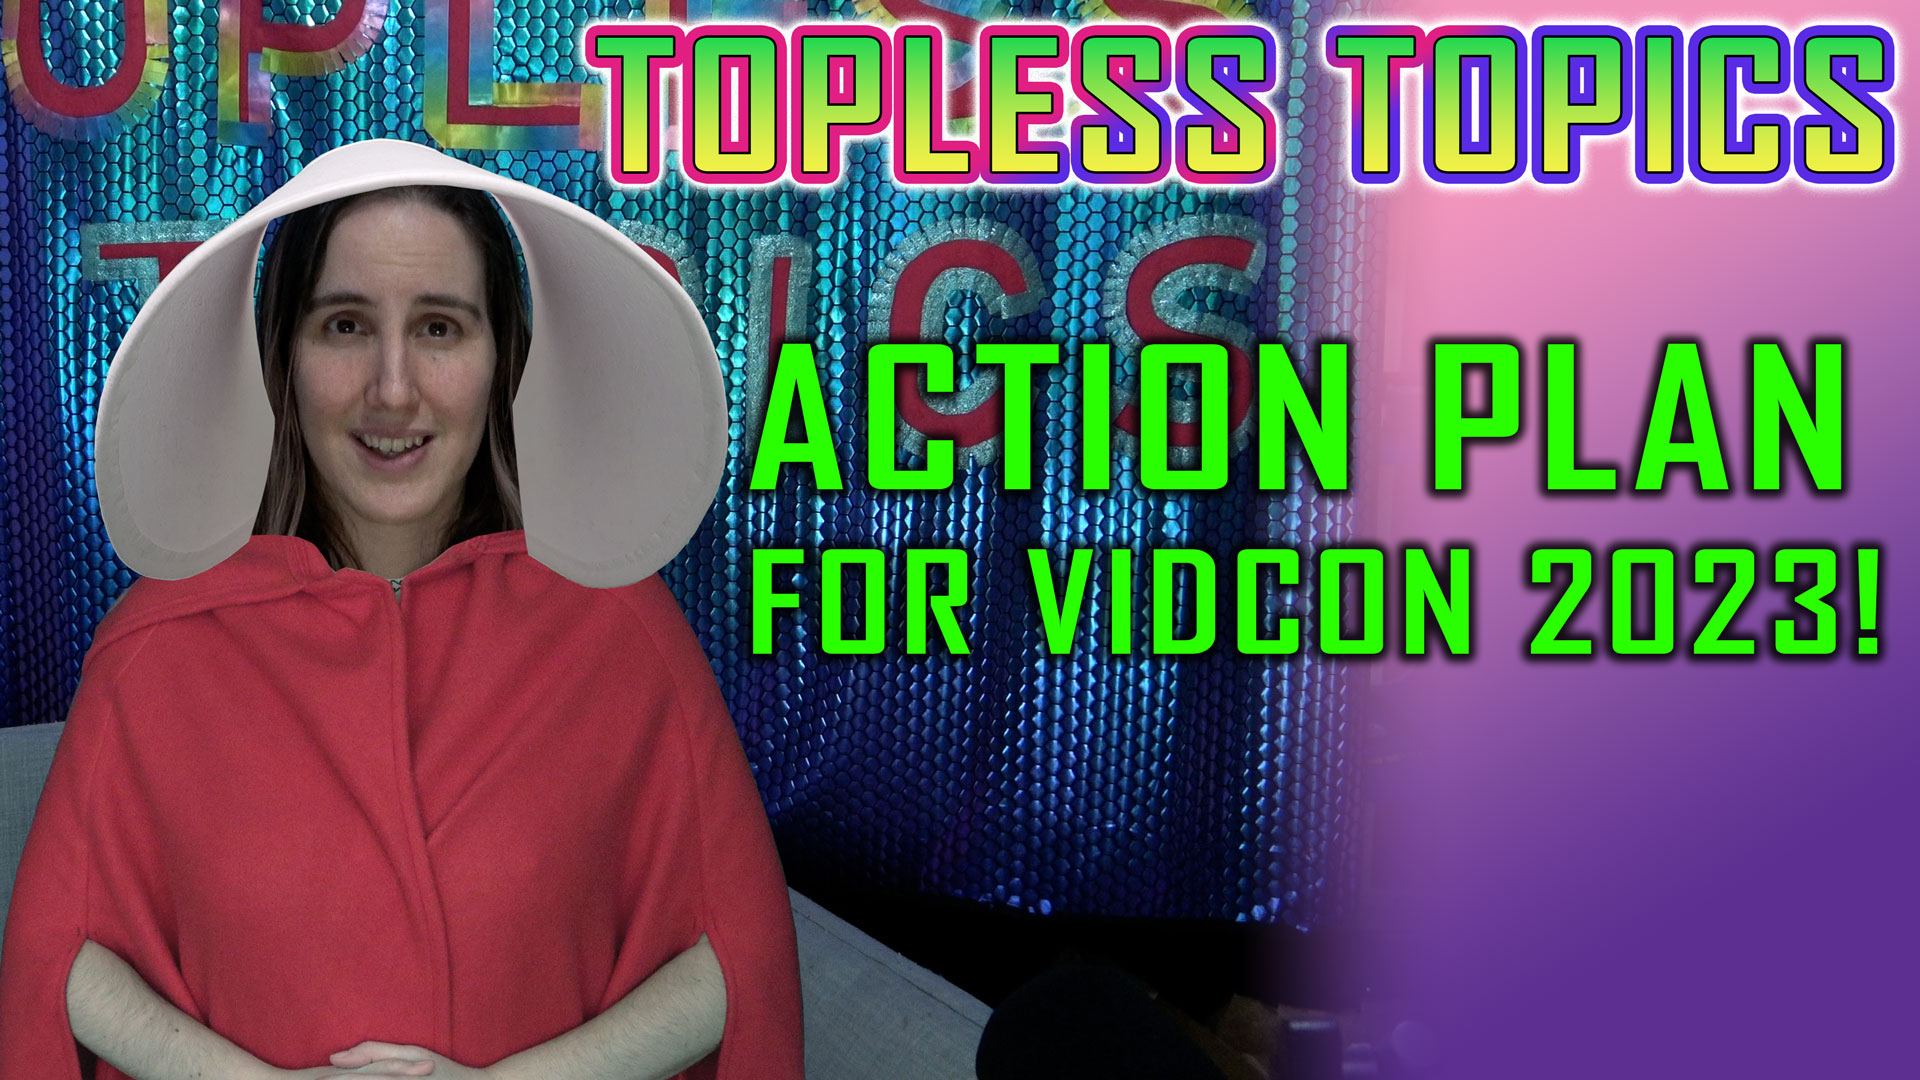 Topless Topics Goes to Vidcon 2023!